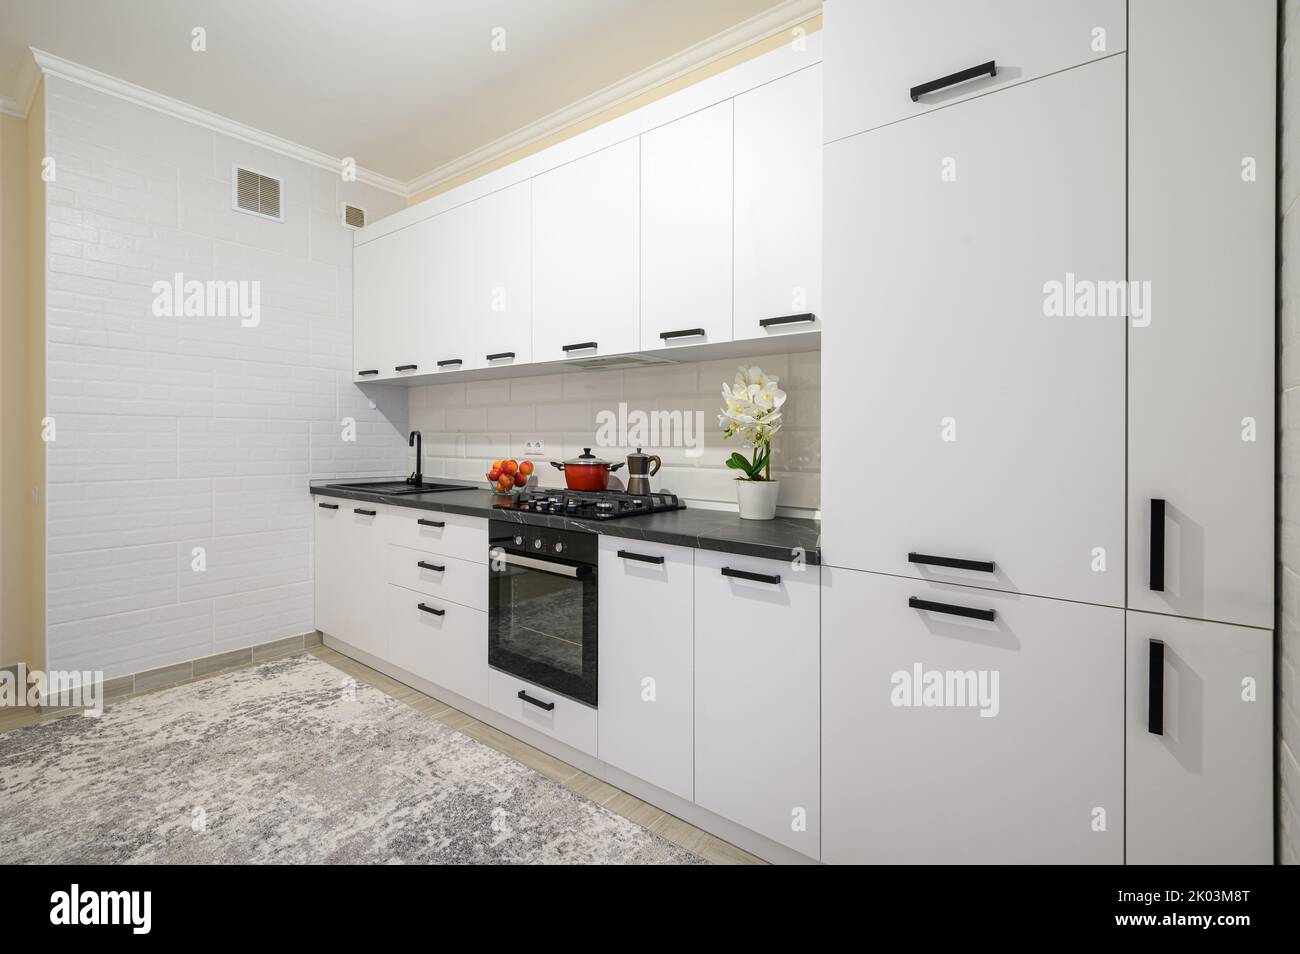 Trendy white modern kitchen interior with minimalistic furniture Stock Photo